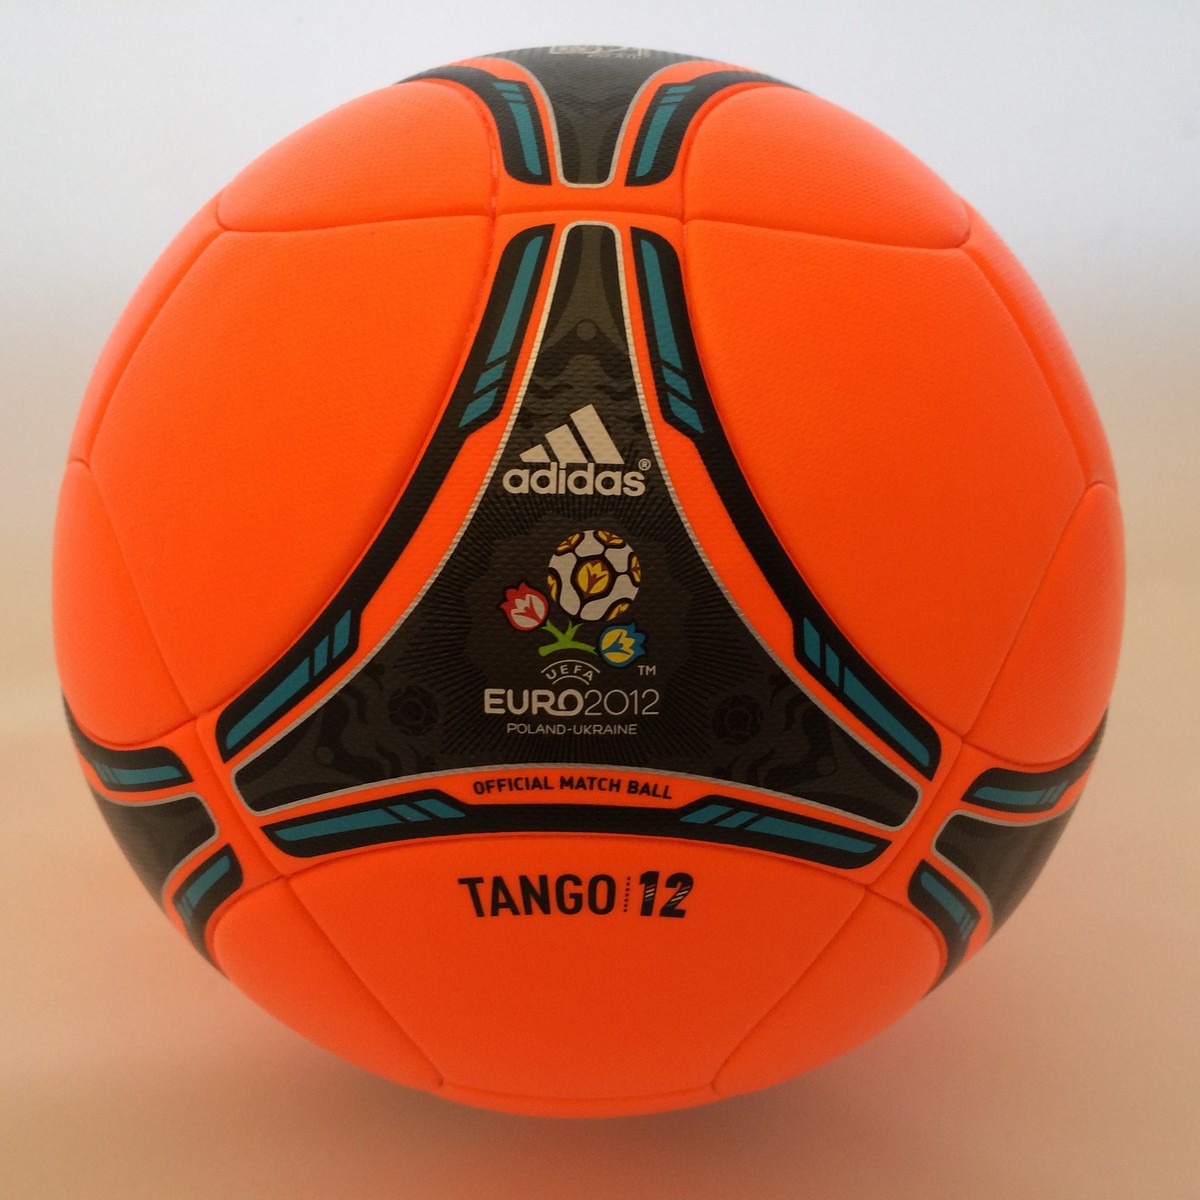 Adidas Tango 12 Winter (OMB) | matchballs.eu